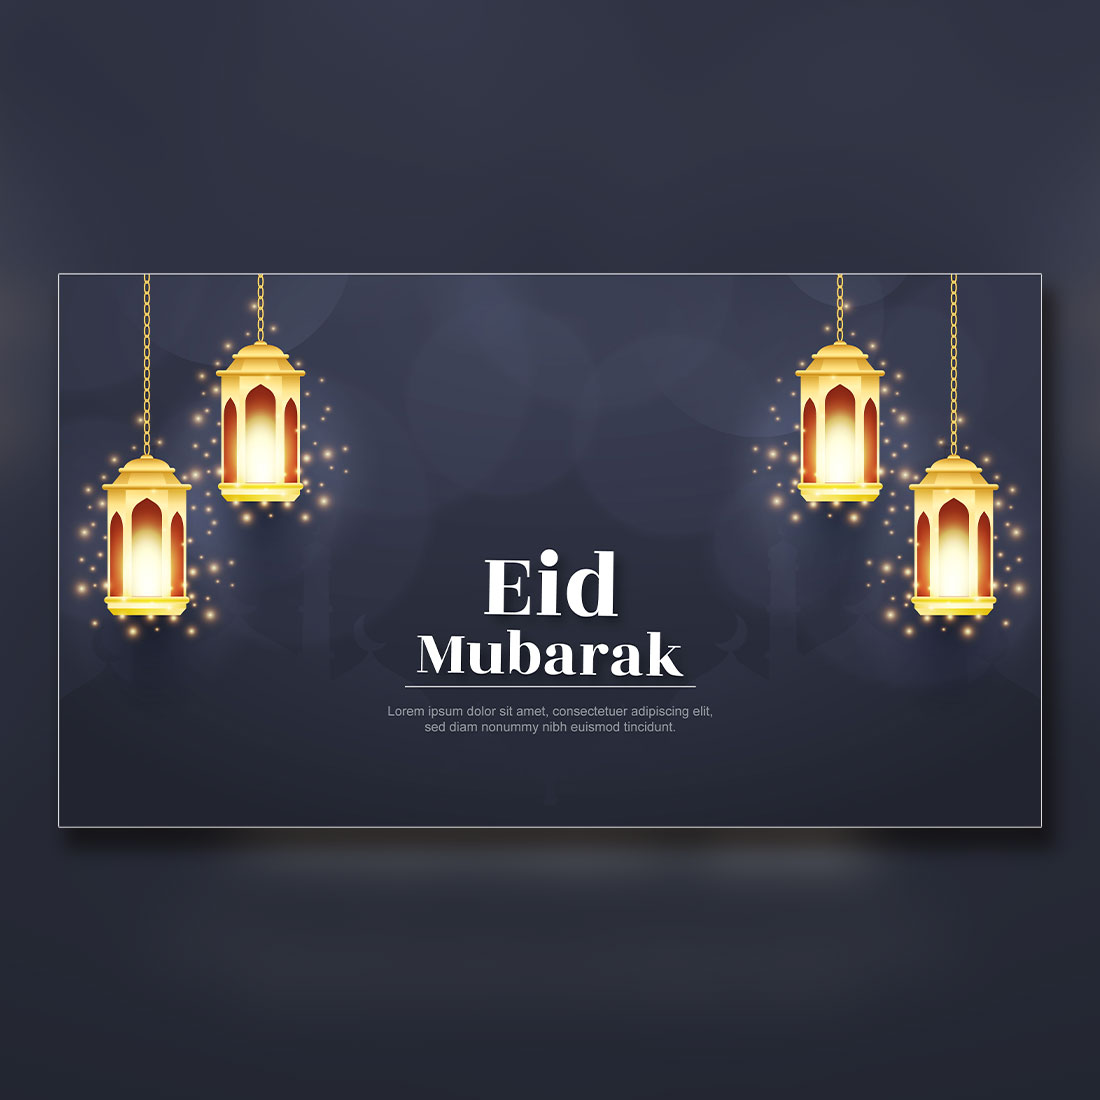 Eid Mubarak and eid ul fitr web banner template cover image.